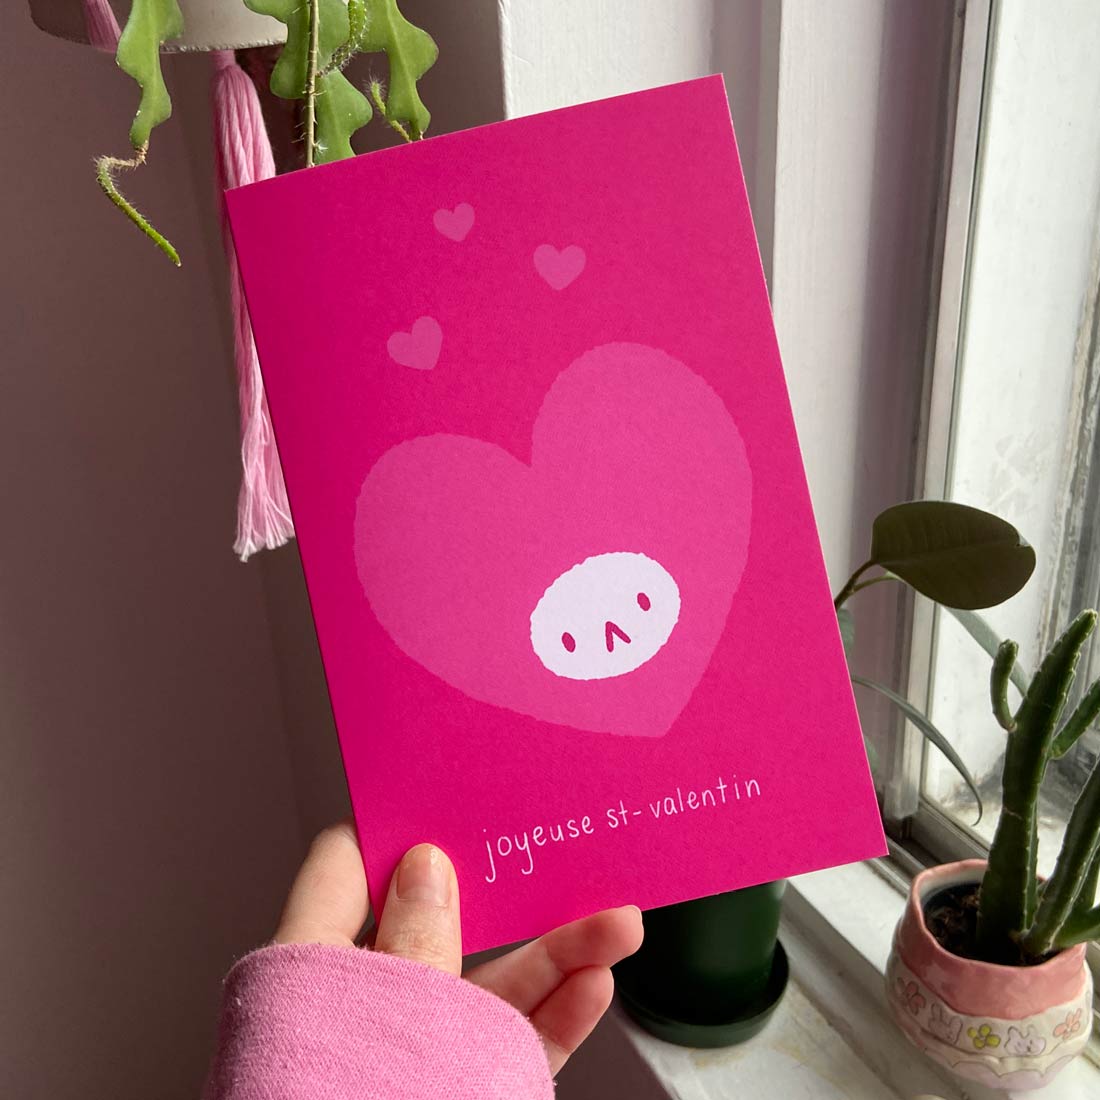 Happy Valentine’s Day Card